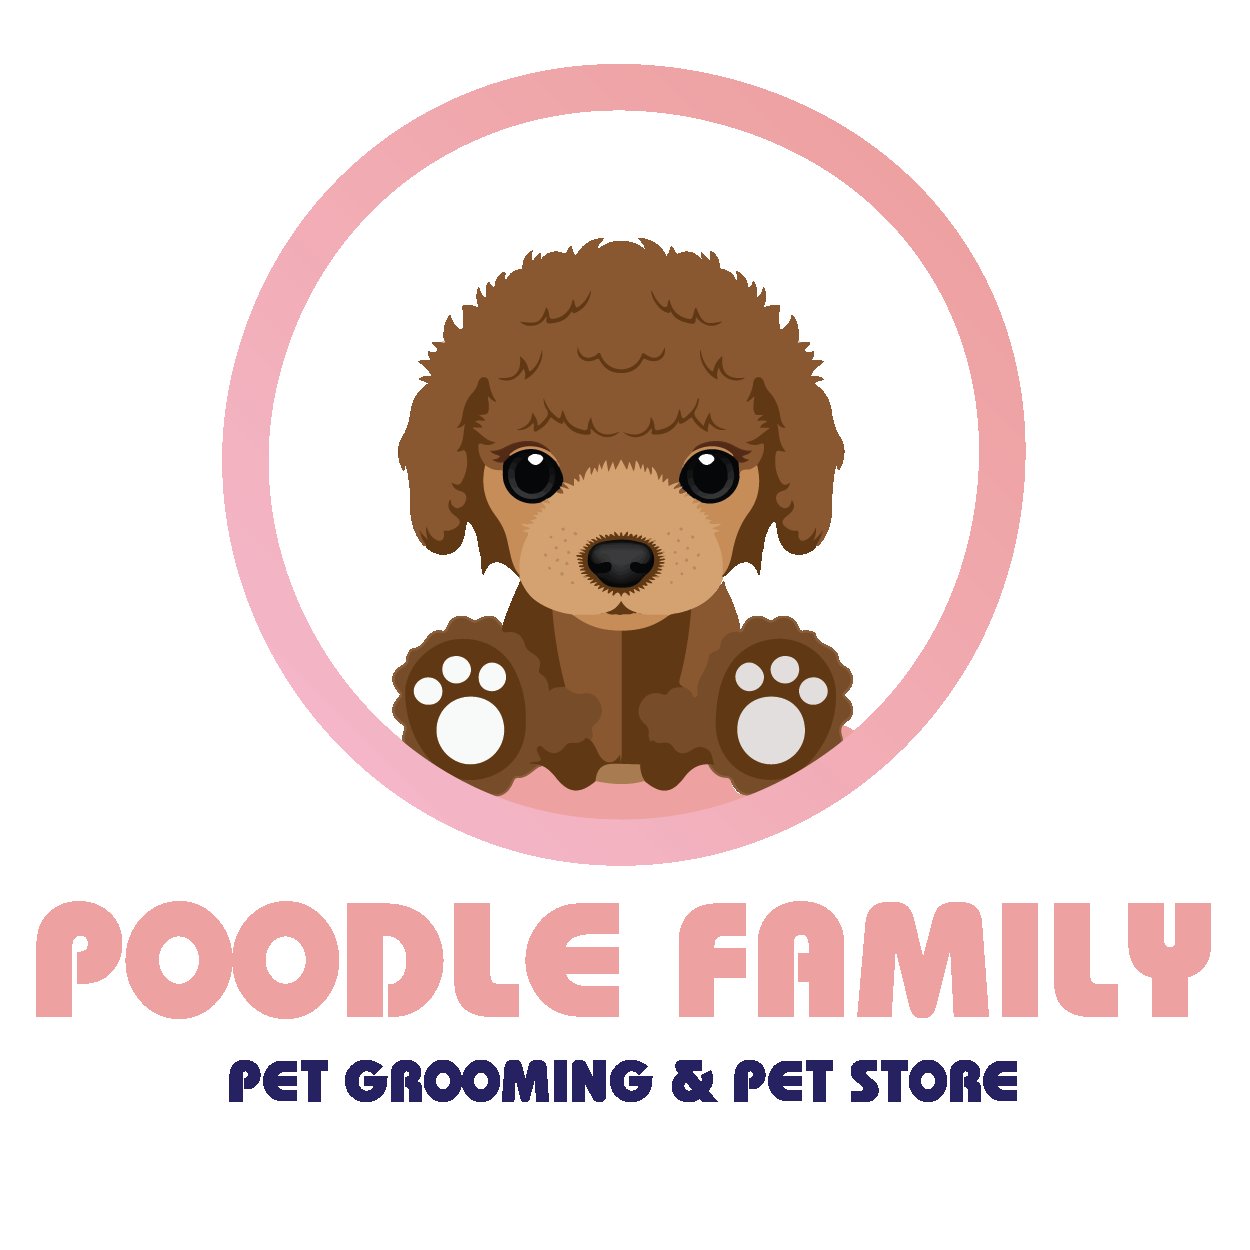 logo poodle family